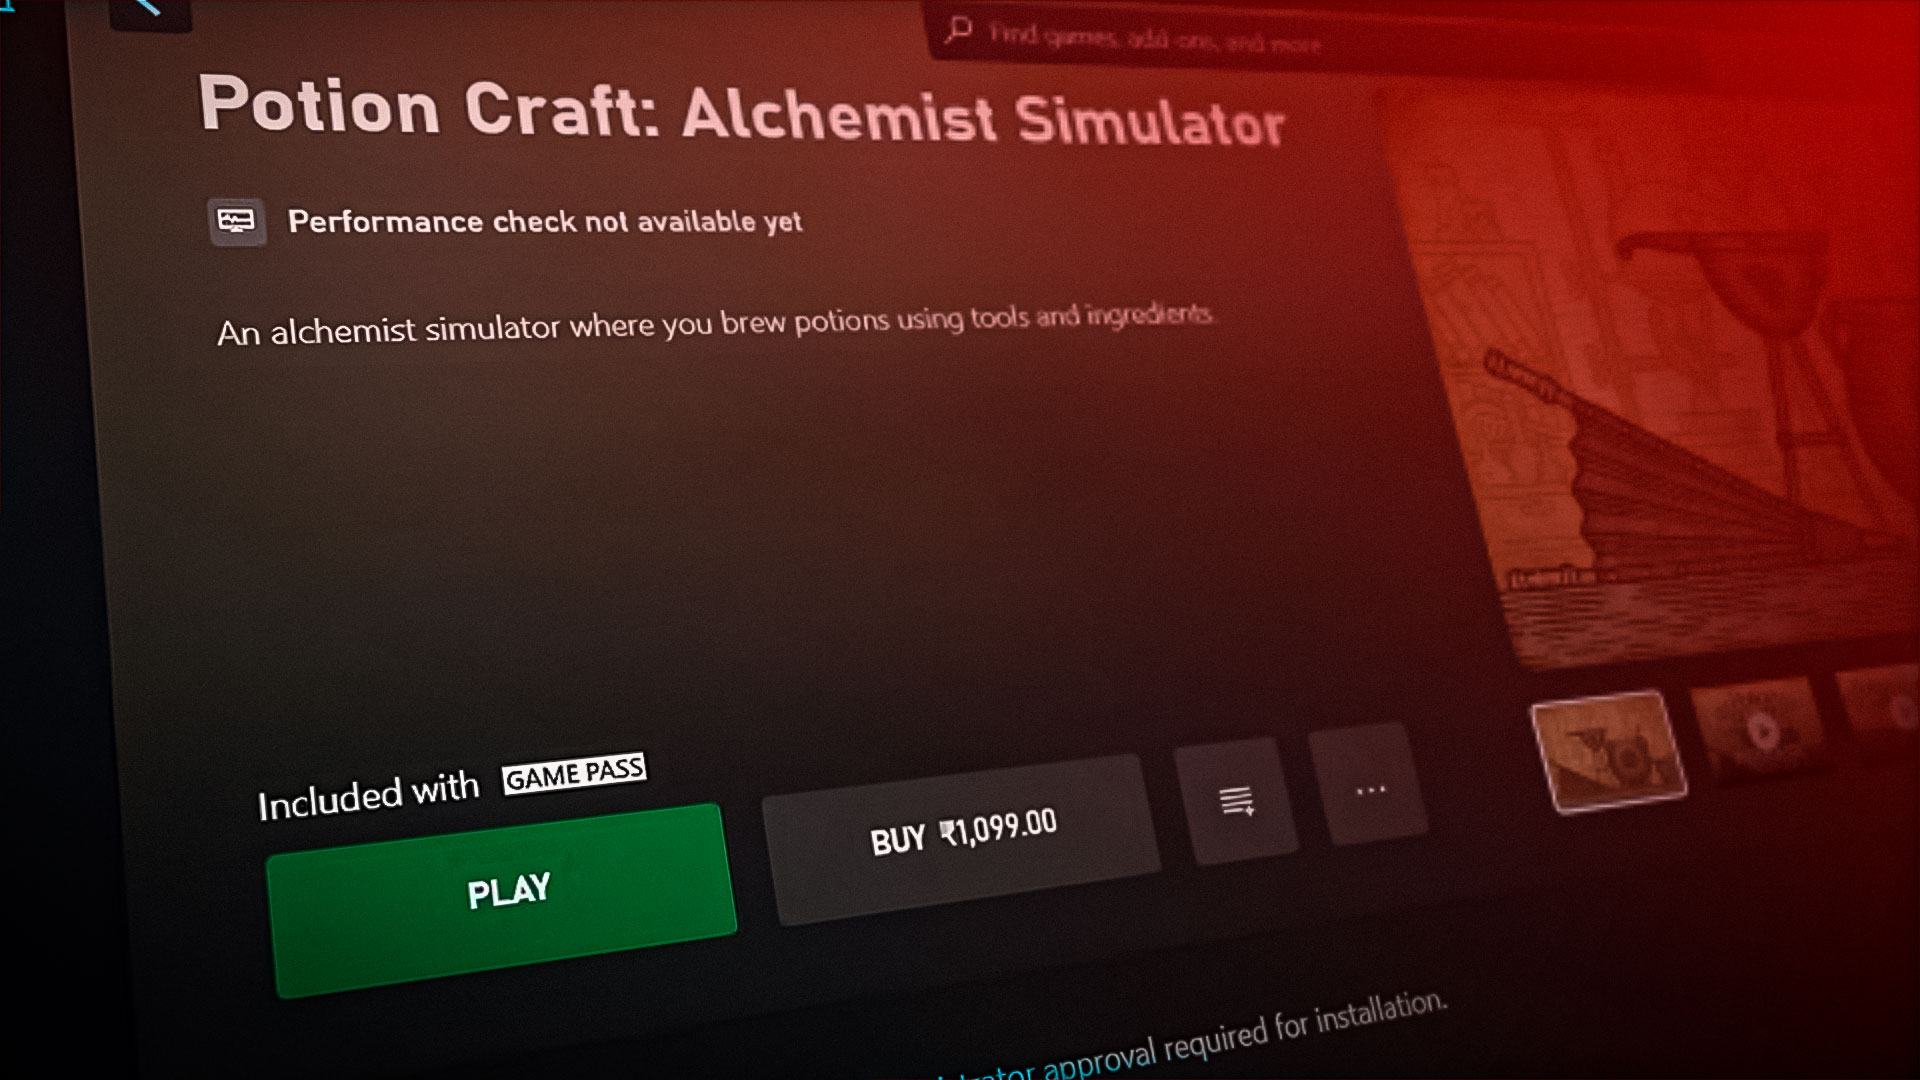 Potion craft alchemist simulator wont install